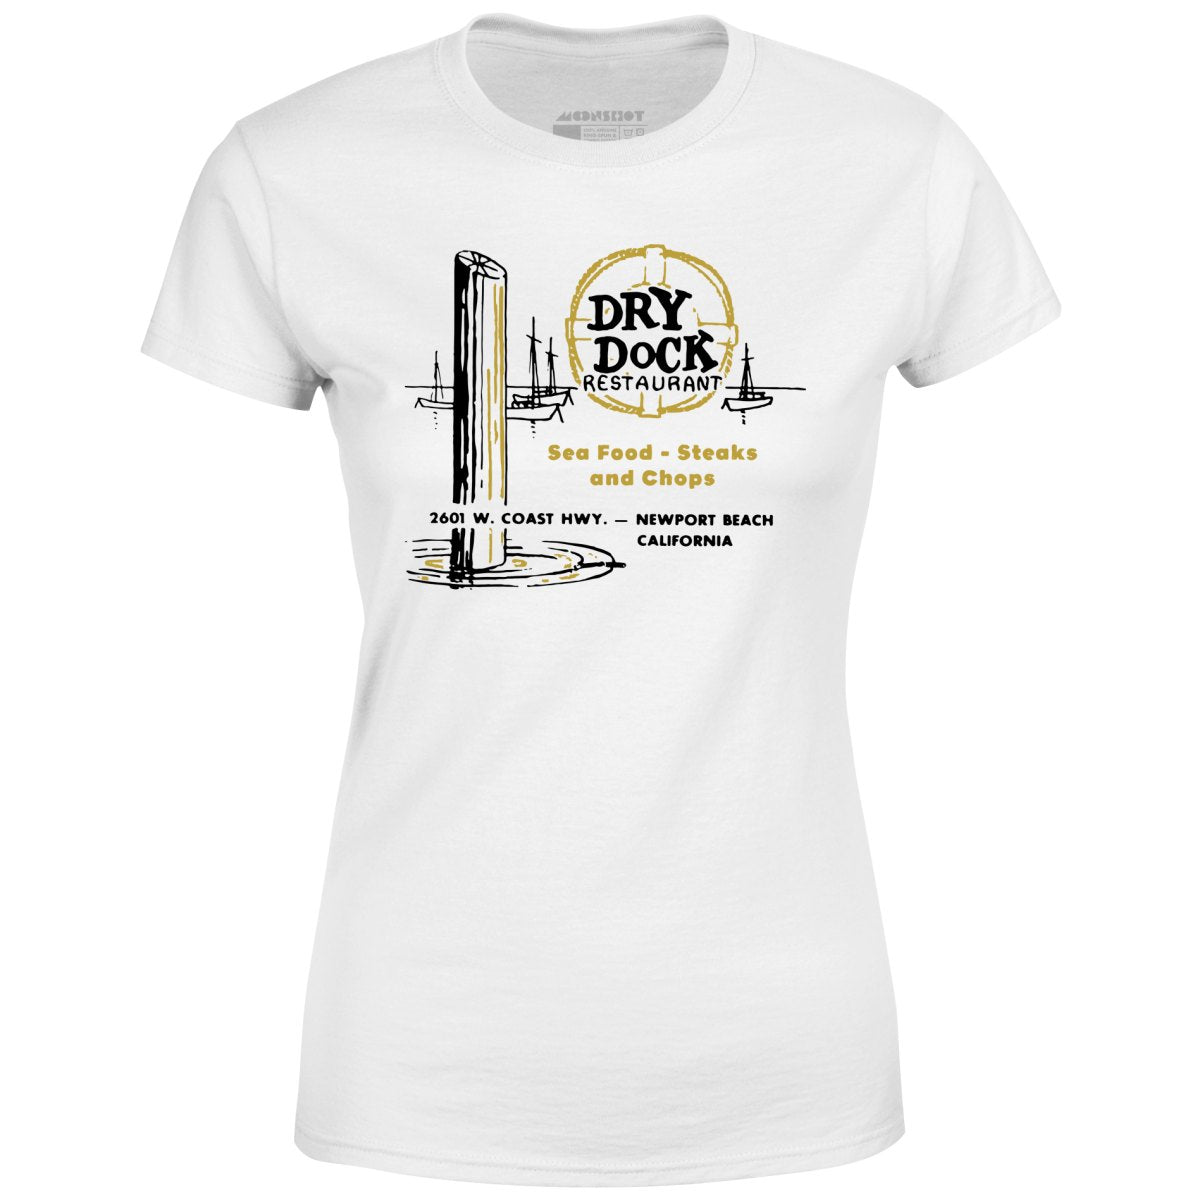 Dry Dock - Newport Beach, CA - Vintage Restaurant - Women's T-Shirt